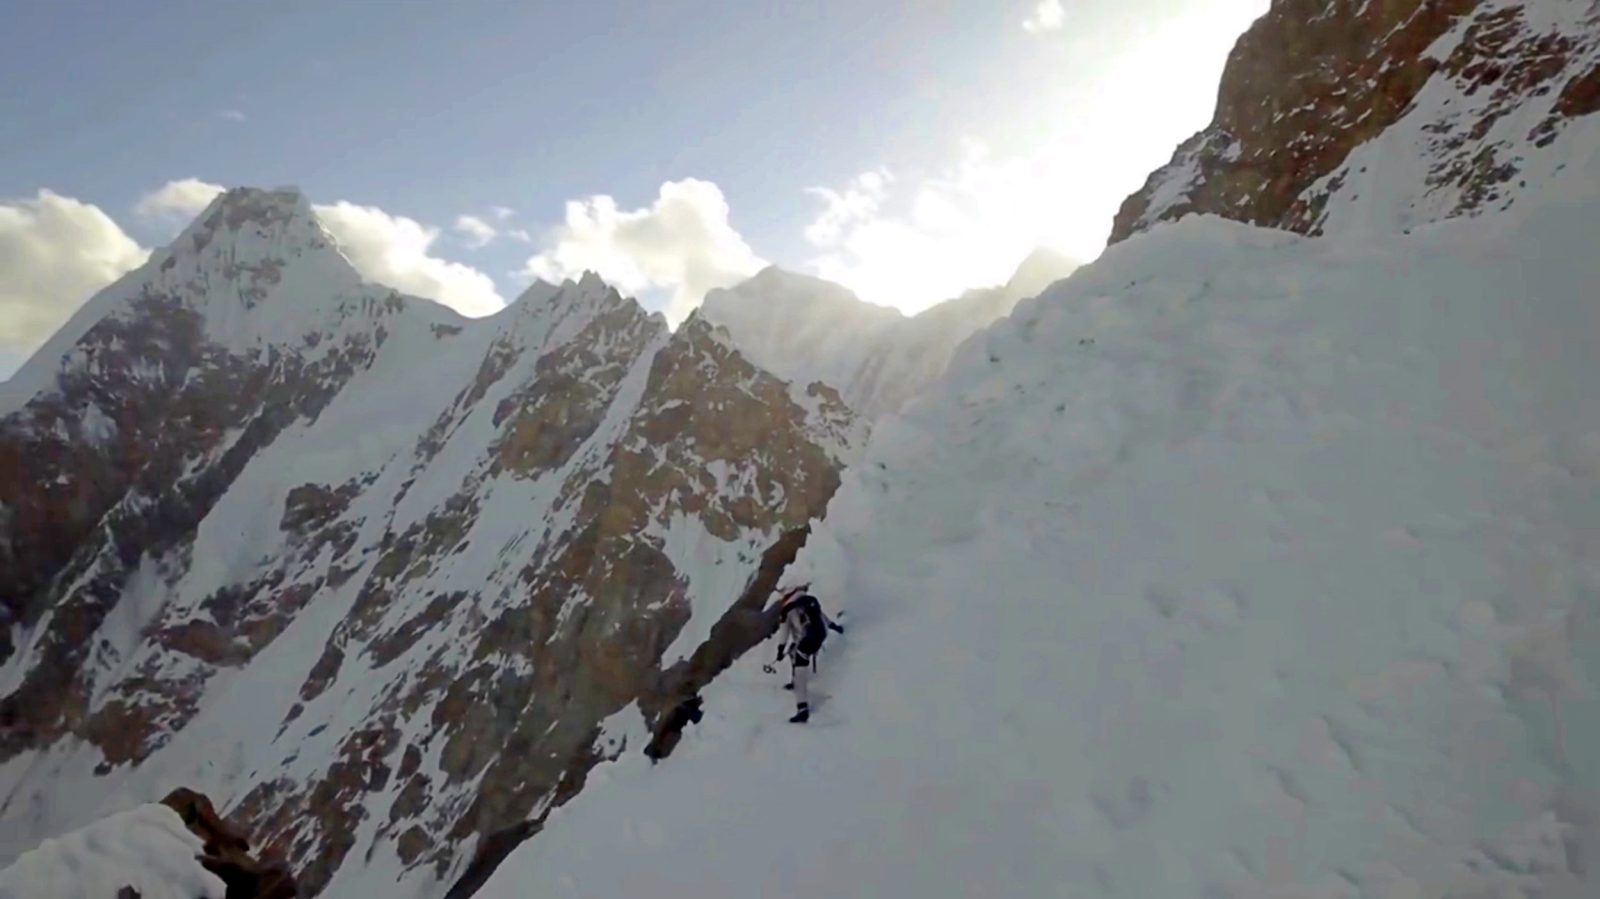 DJI Mavic Pro captures first person to ever ski down the K2 mountain summit